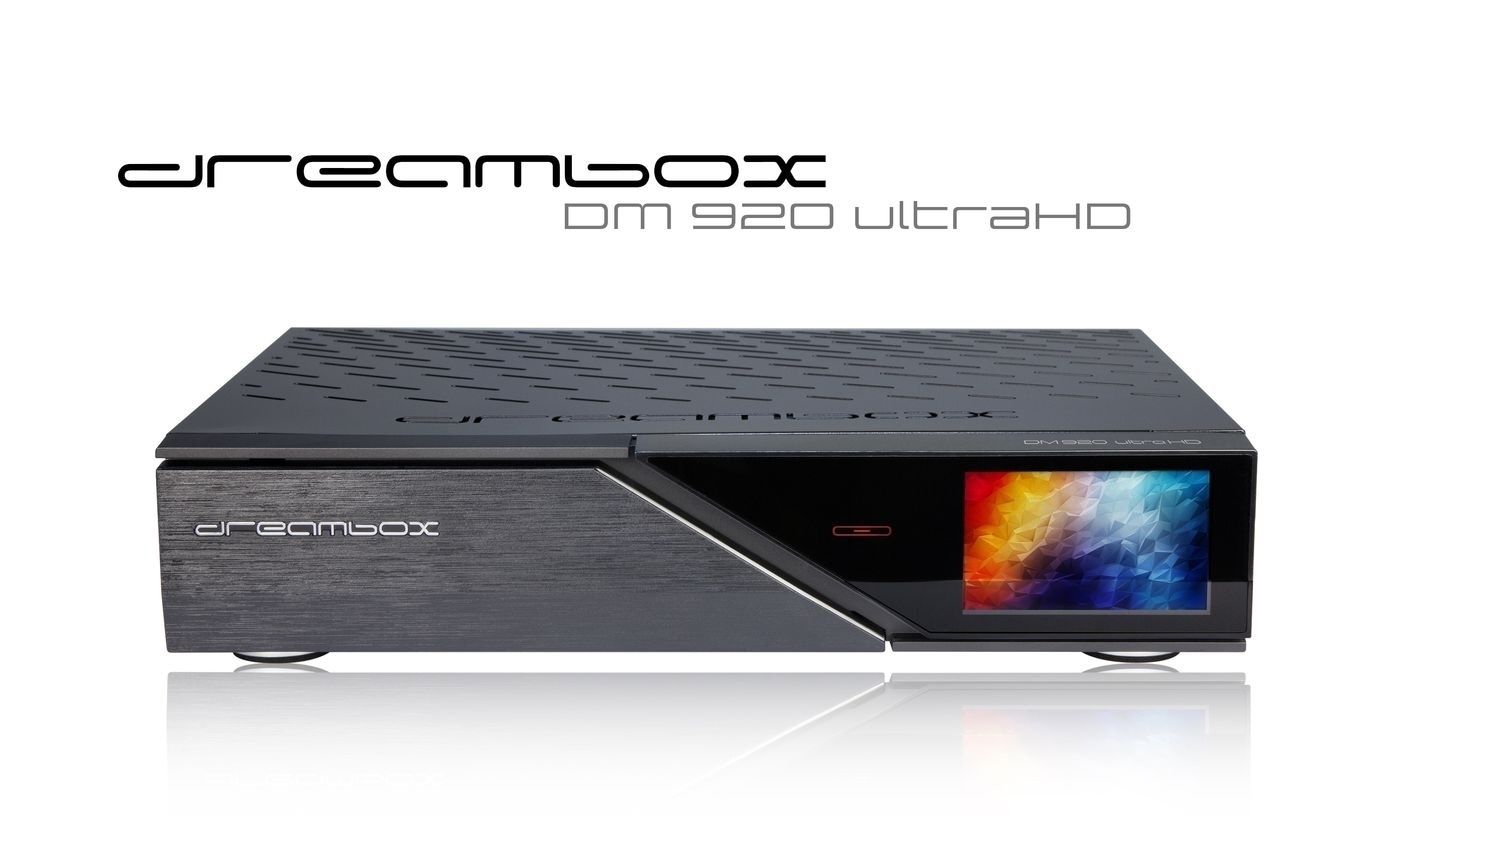 Dreambox 920 - DM920 Ultra HD with 2 x Dual DVB-C/T2 tuners